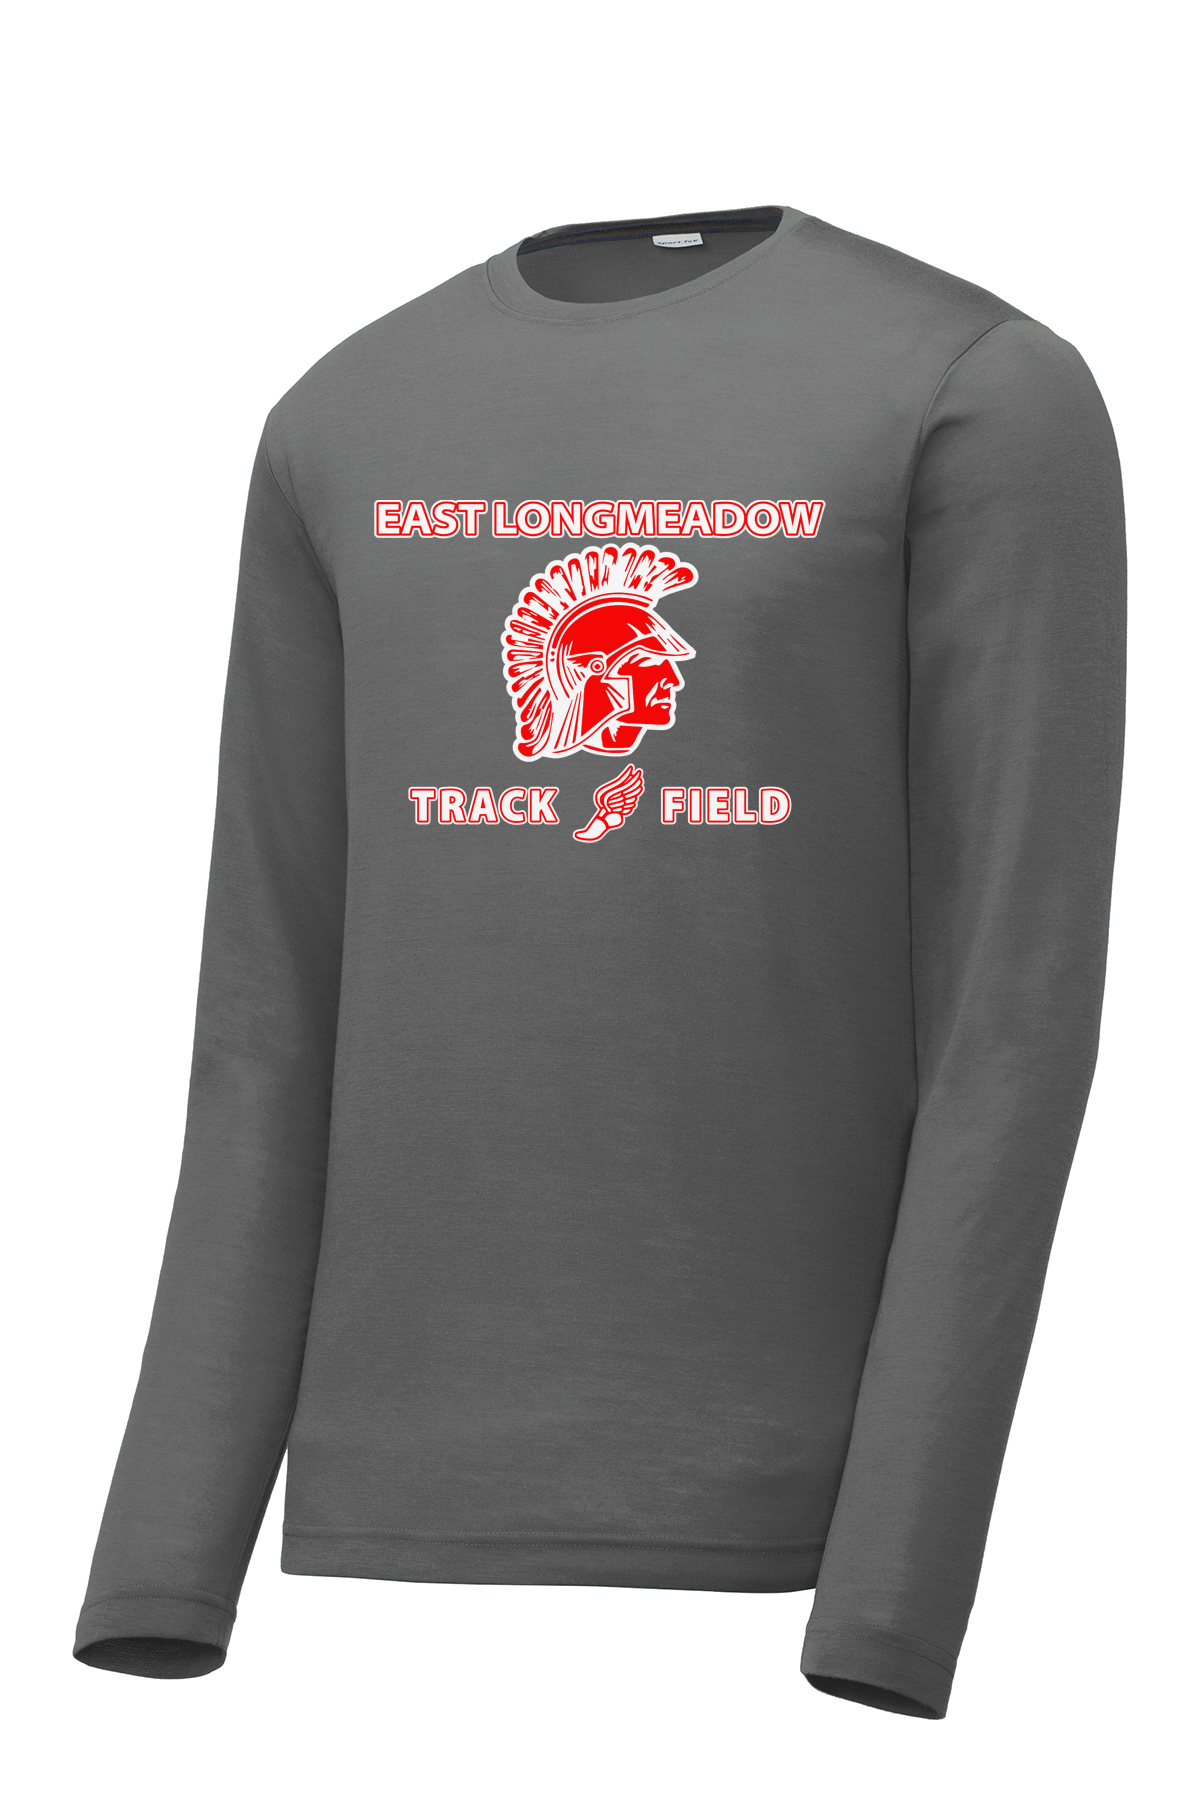 East Longmeadow Track and Field Smoke Grey Long Sleeve CottonTouch Performance Shirt